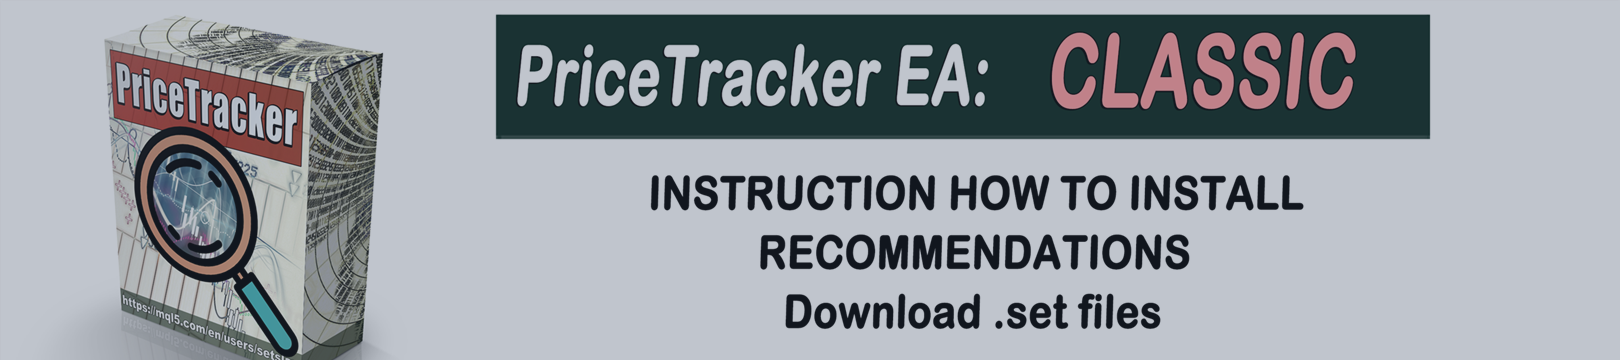 PriceTracker EA CLASSIC